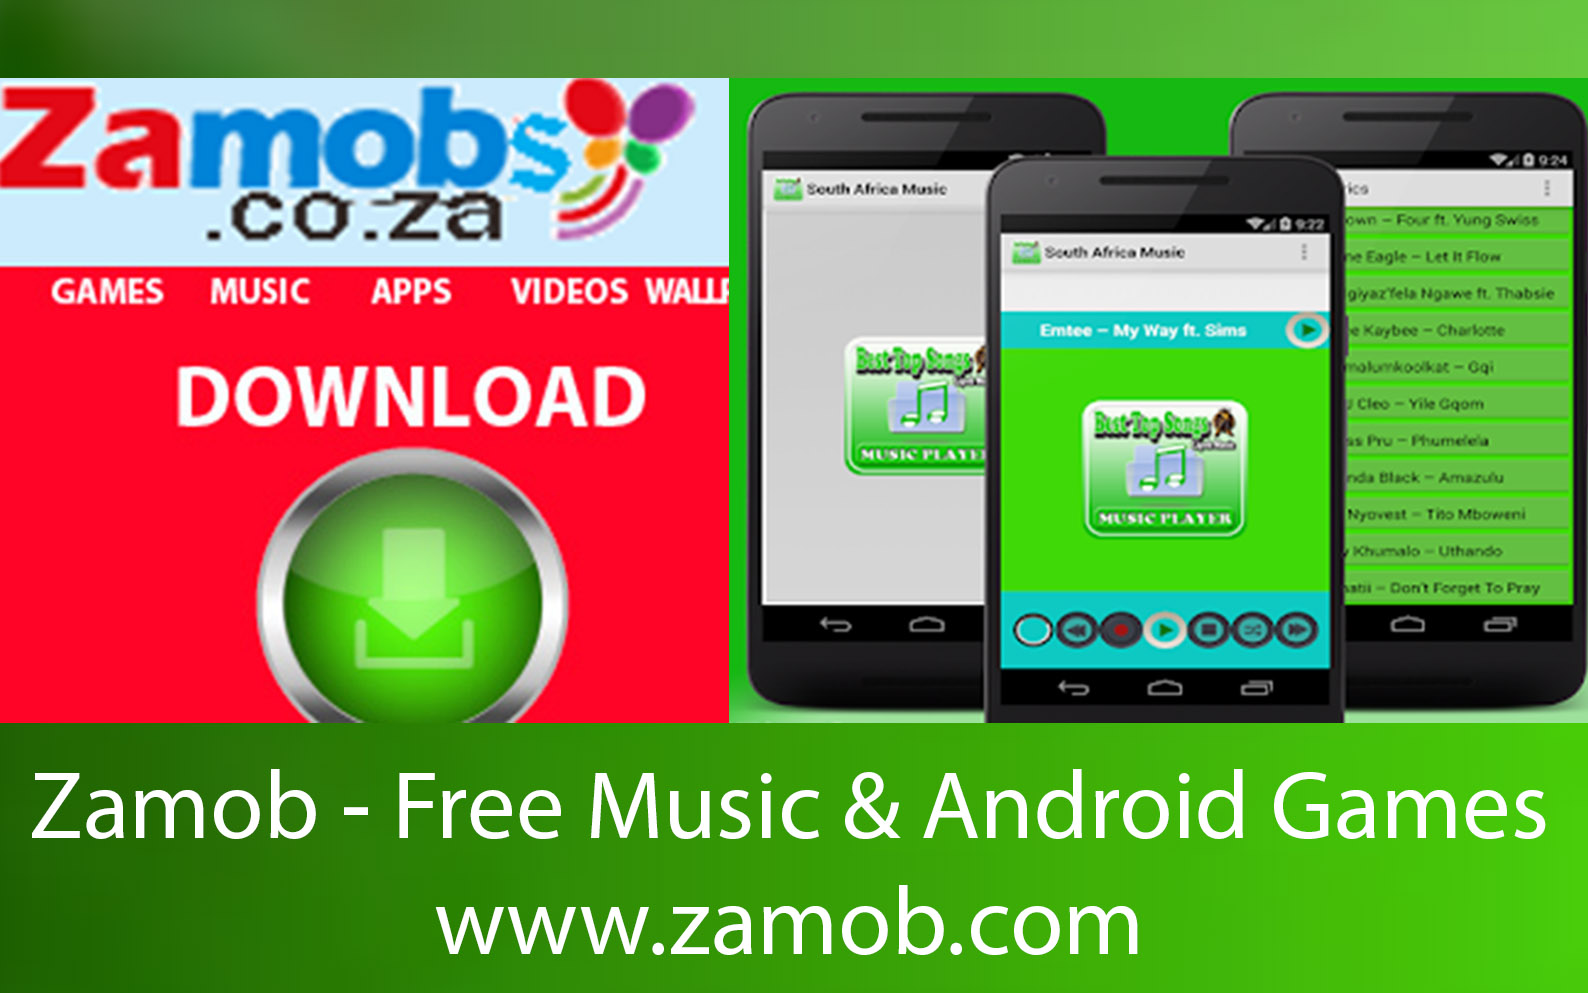 Www Zamob - Zamob - Free Music & Android Games | www.zamob.com - TecNg